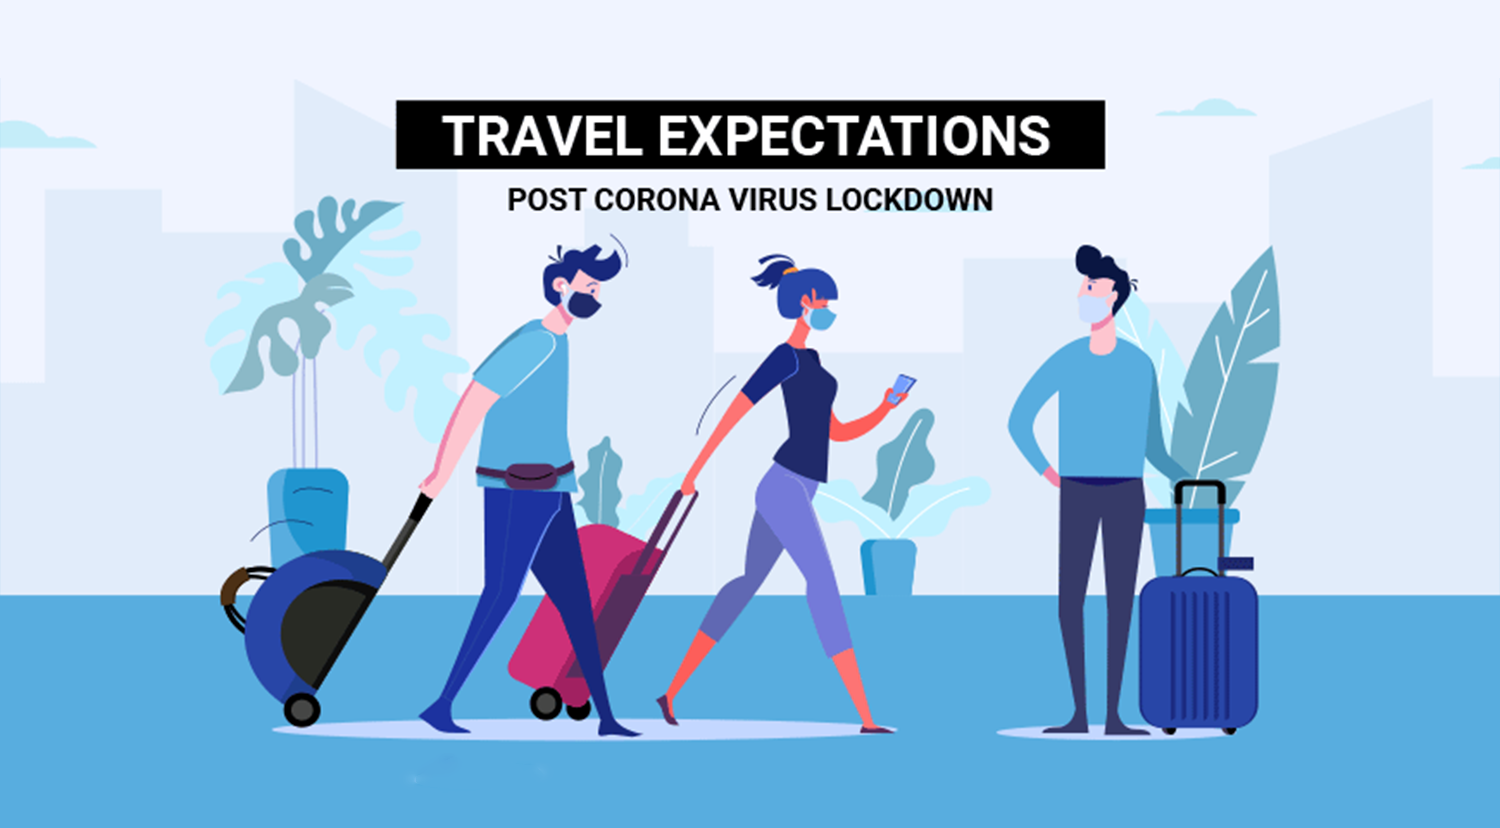 Travel Expectations - Post Corona Virus Lockdown